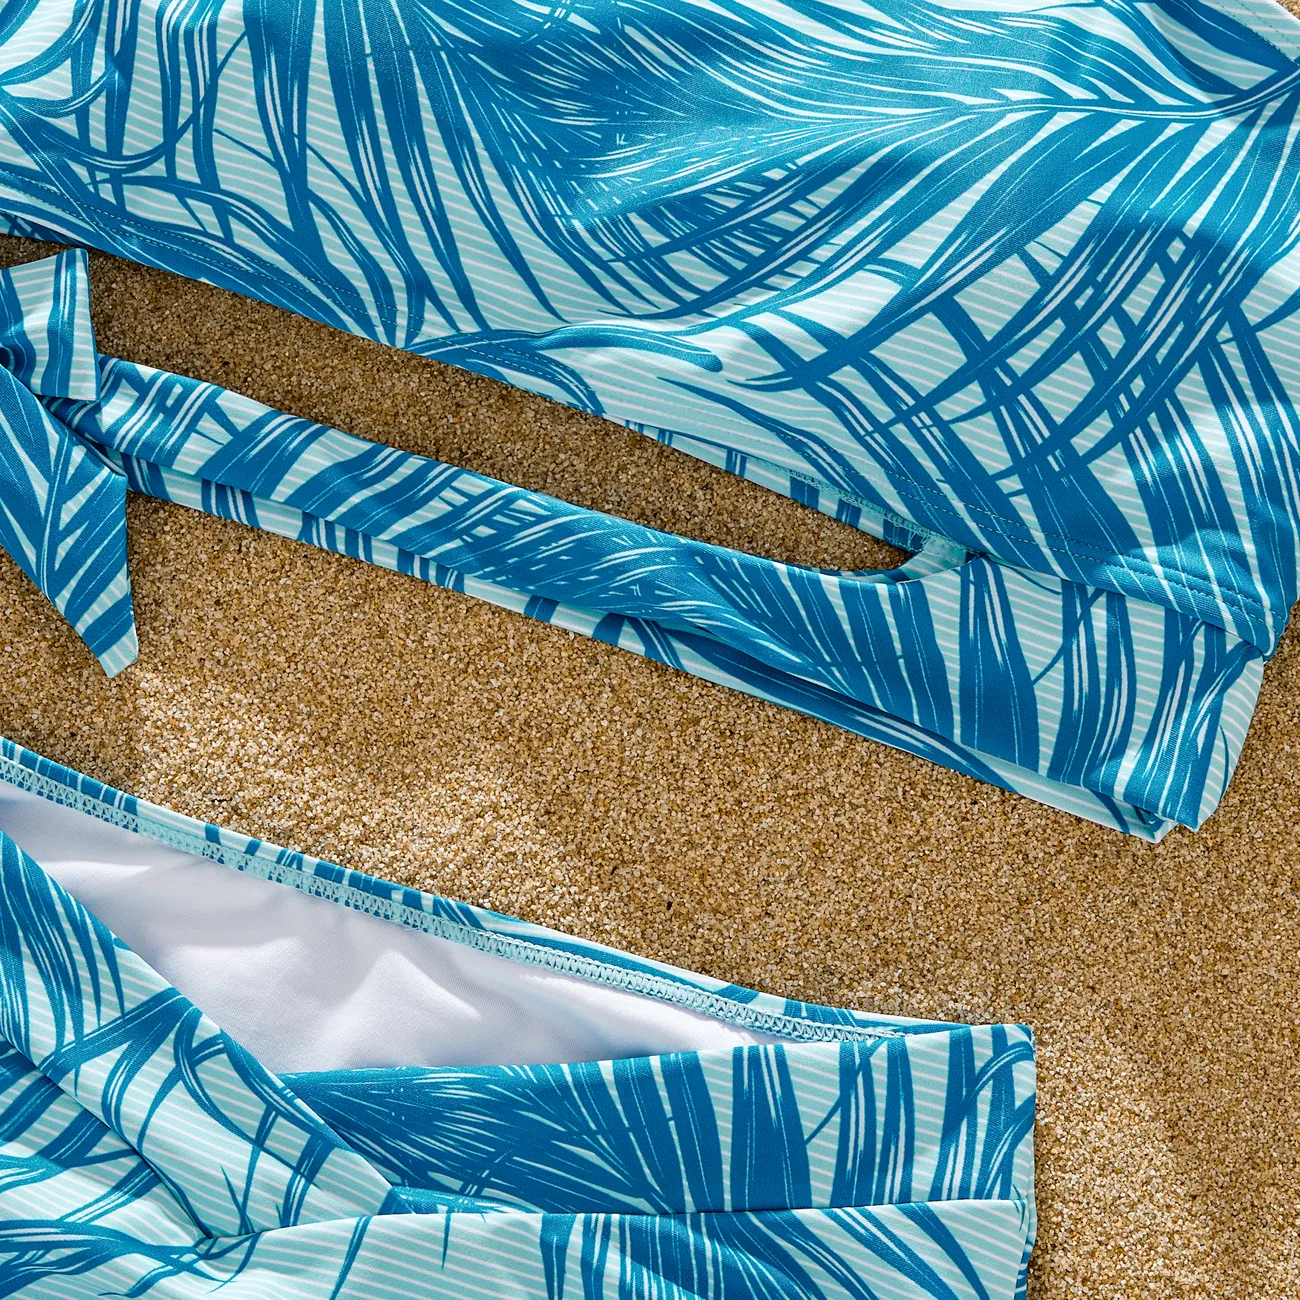 Family Matching Leaf Pattern Drawstring Swim Trunks or One-Shoulder Bikini with Removable Strap Blue big image 1